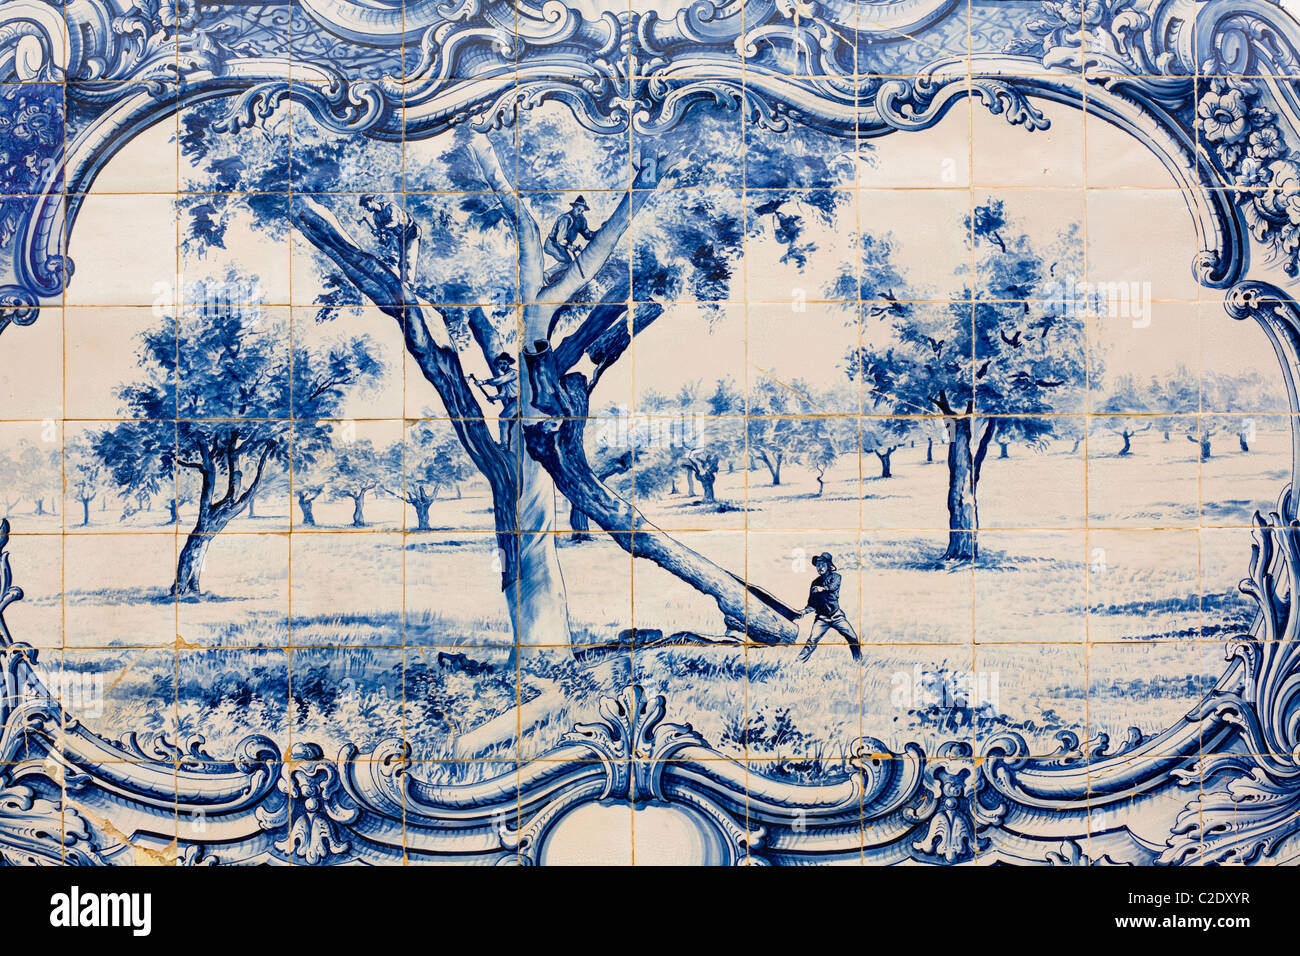 Cork harvest depicted in tiles (azulejos) at Marble Museum, Vila Viçosa, Portugal Stock Photo